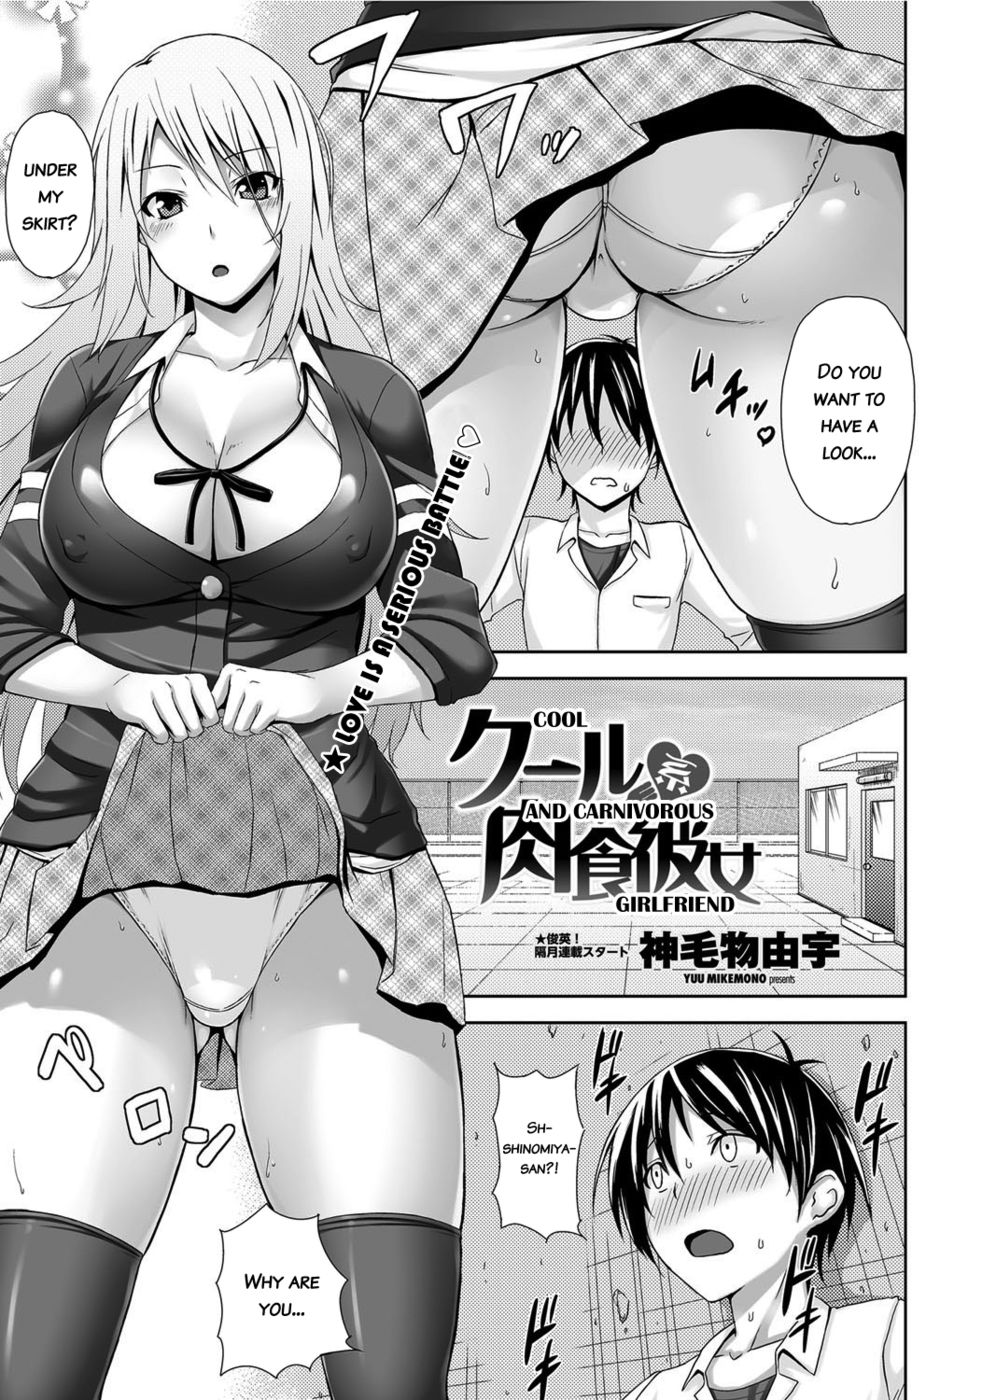 Hentai Manga Comic-Cool and Carnivorous Girlfriend-Read-1